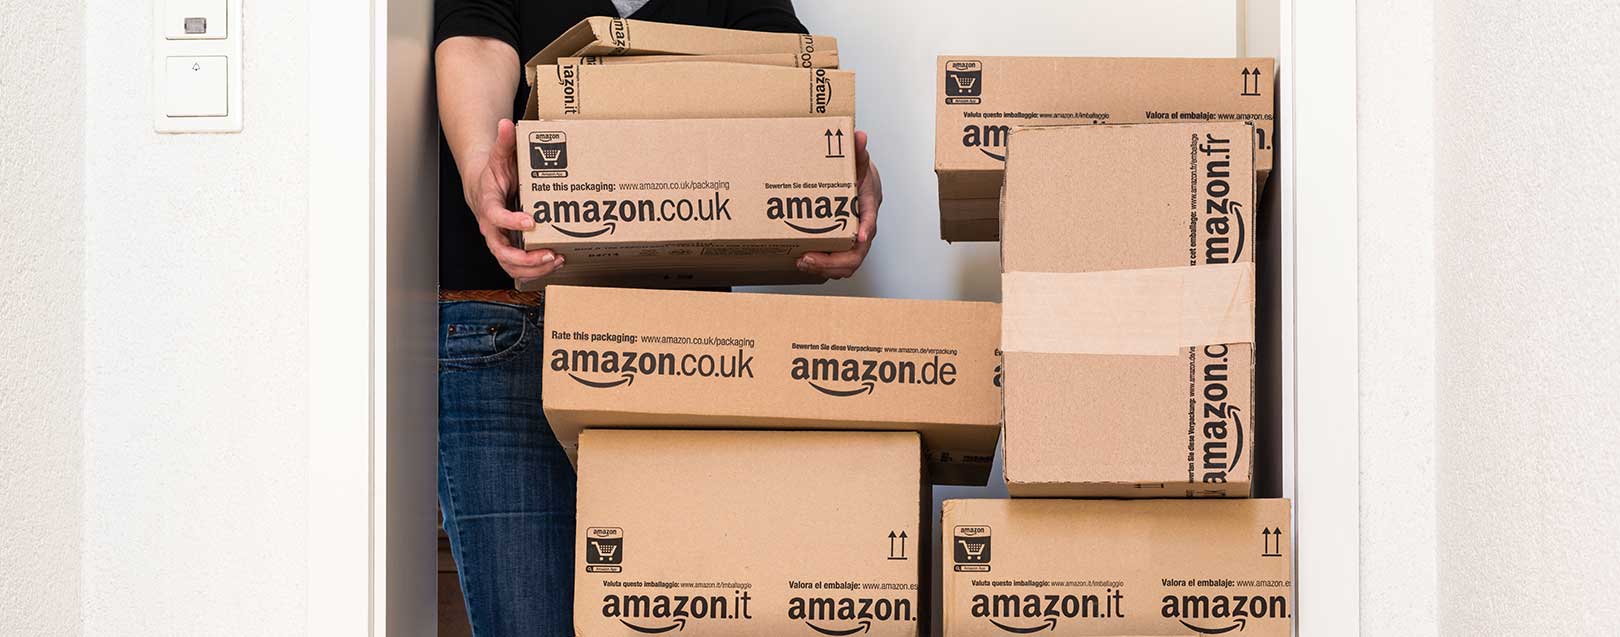 Amazon witnesses $857 million quarterly profit